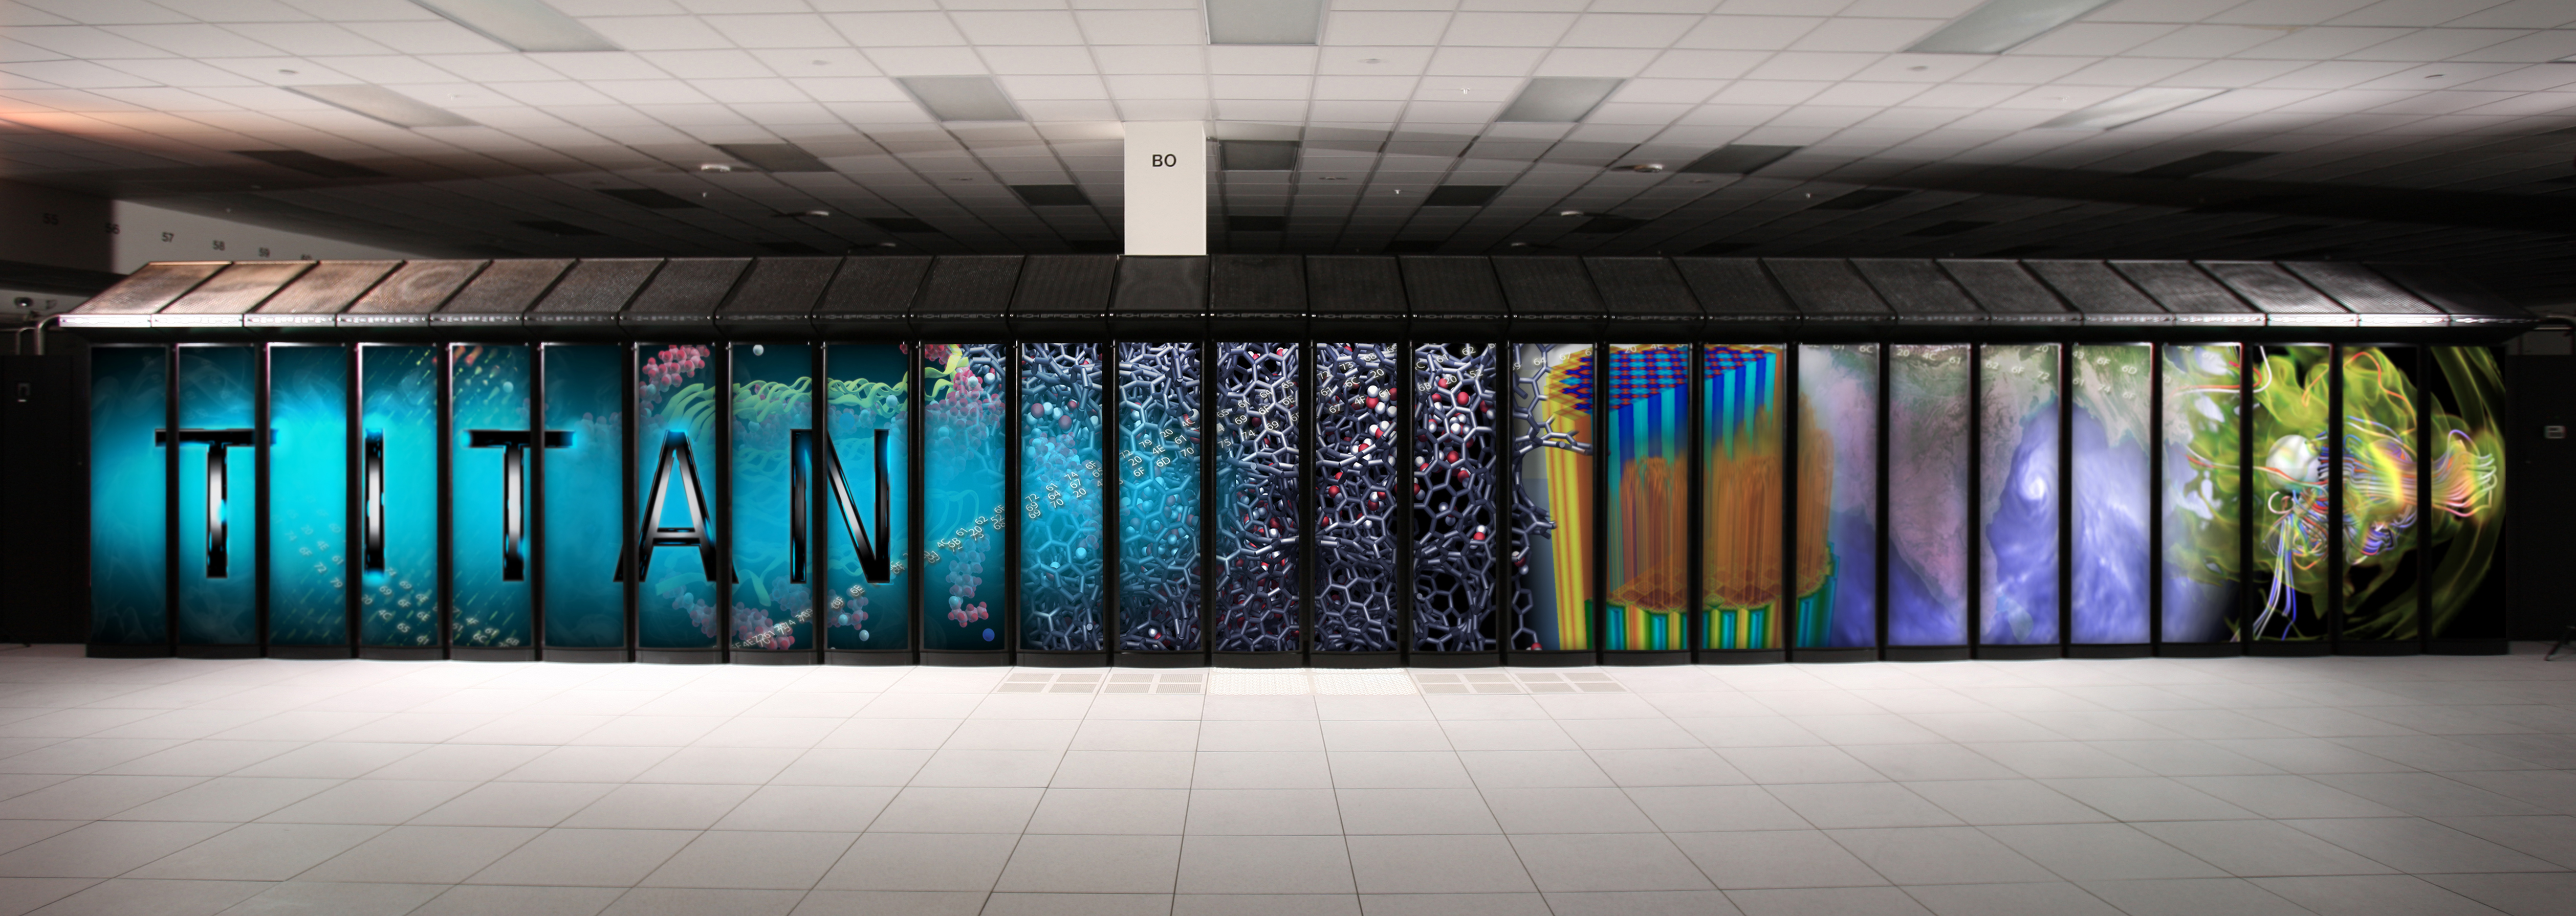 Cray Titan supercomputer